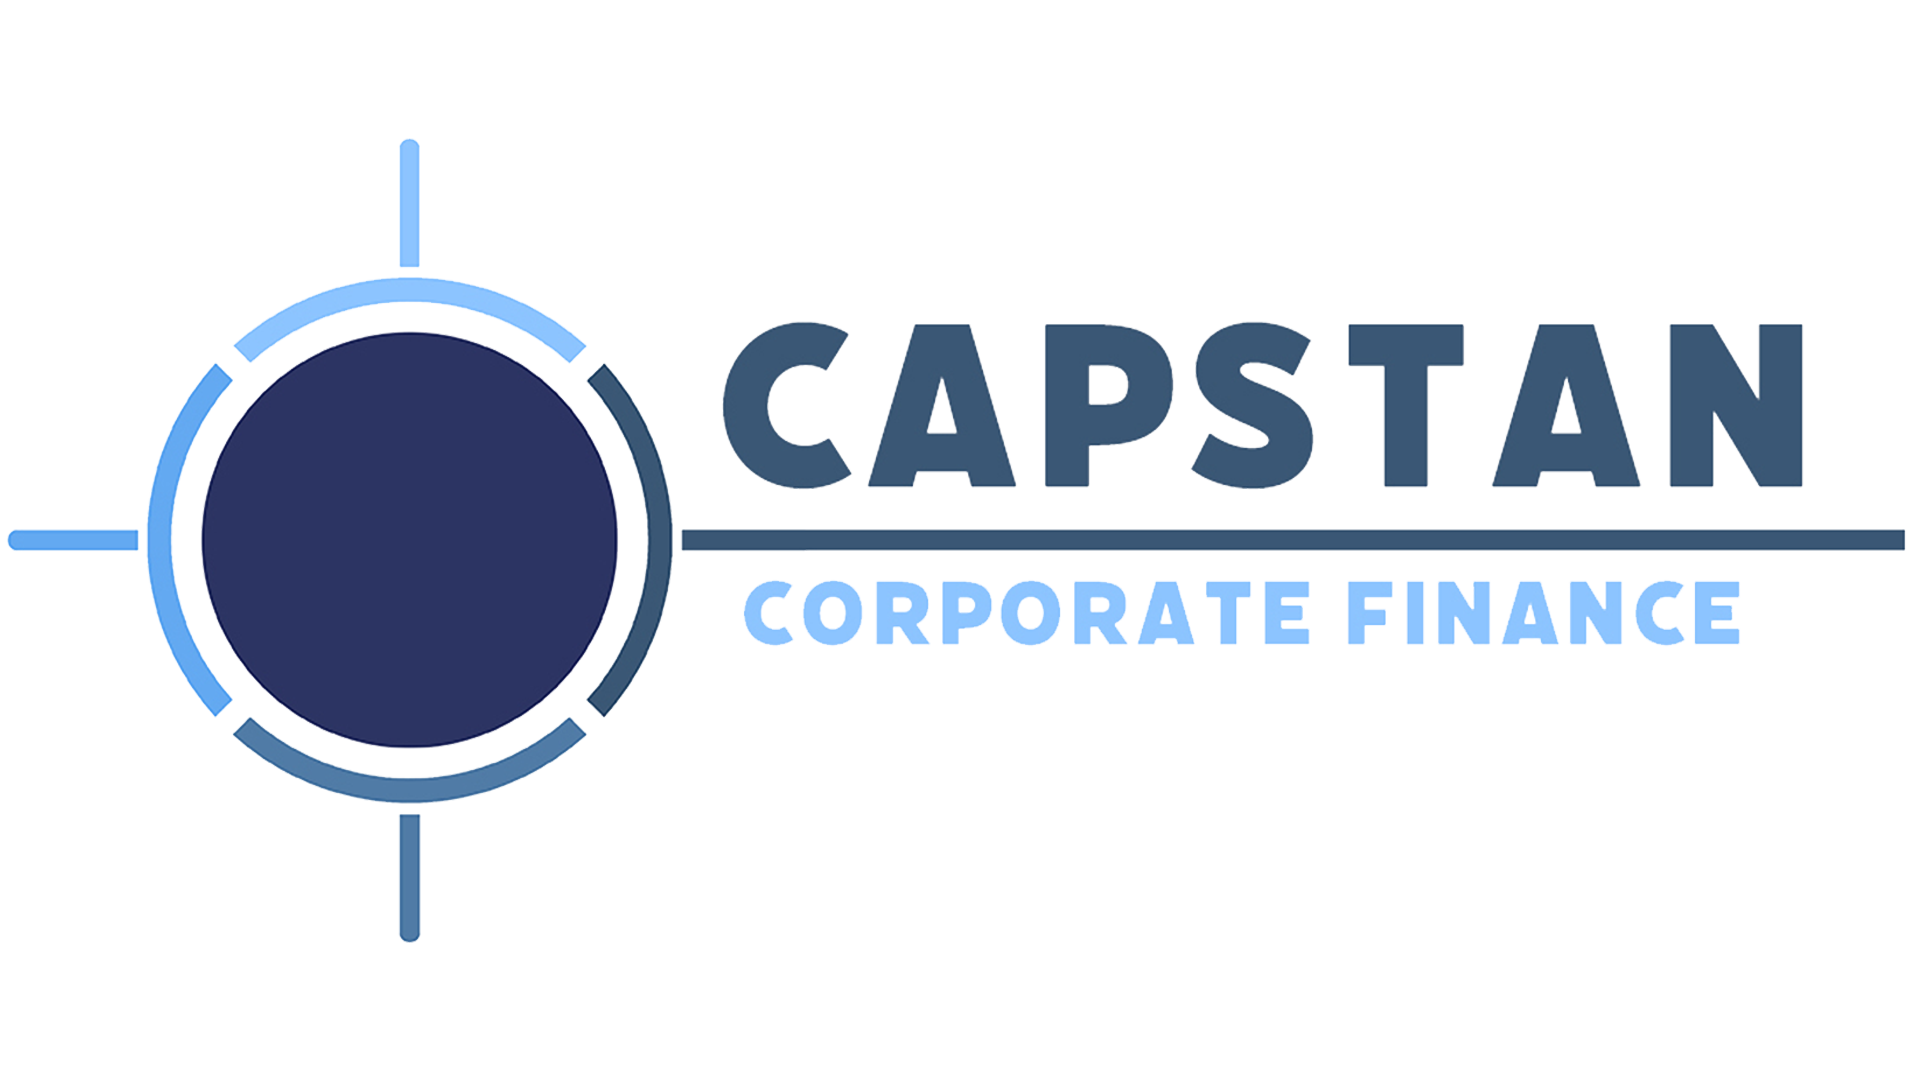 Capstan Corporate Finance